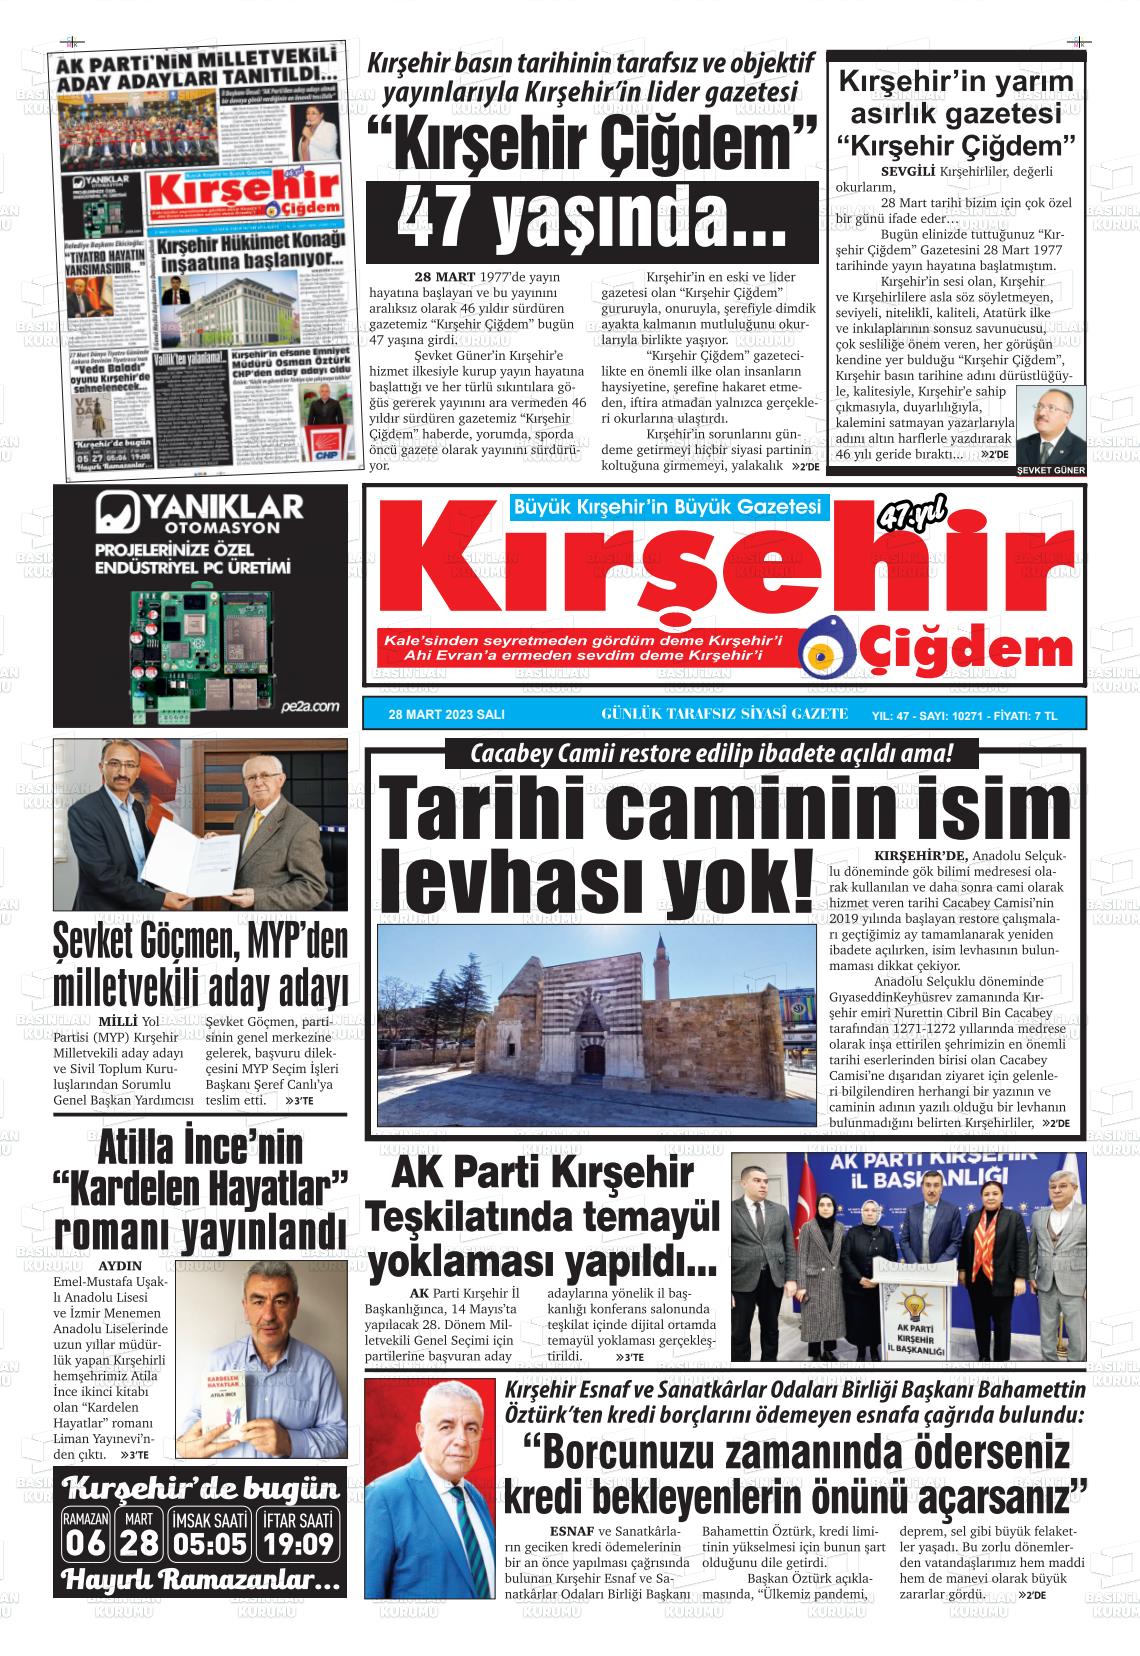 28 Mart 2023 Kırşehir Çiğdem Gazete Manşeti